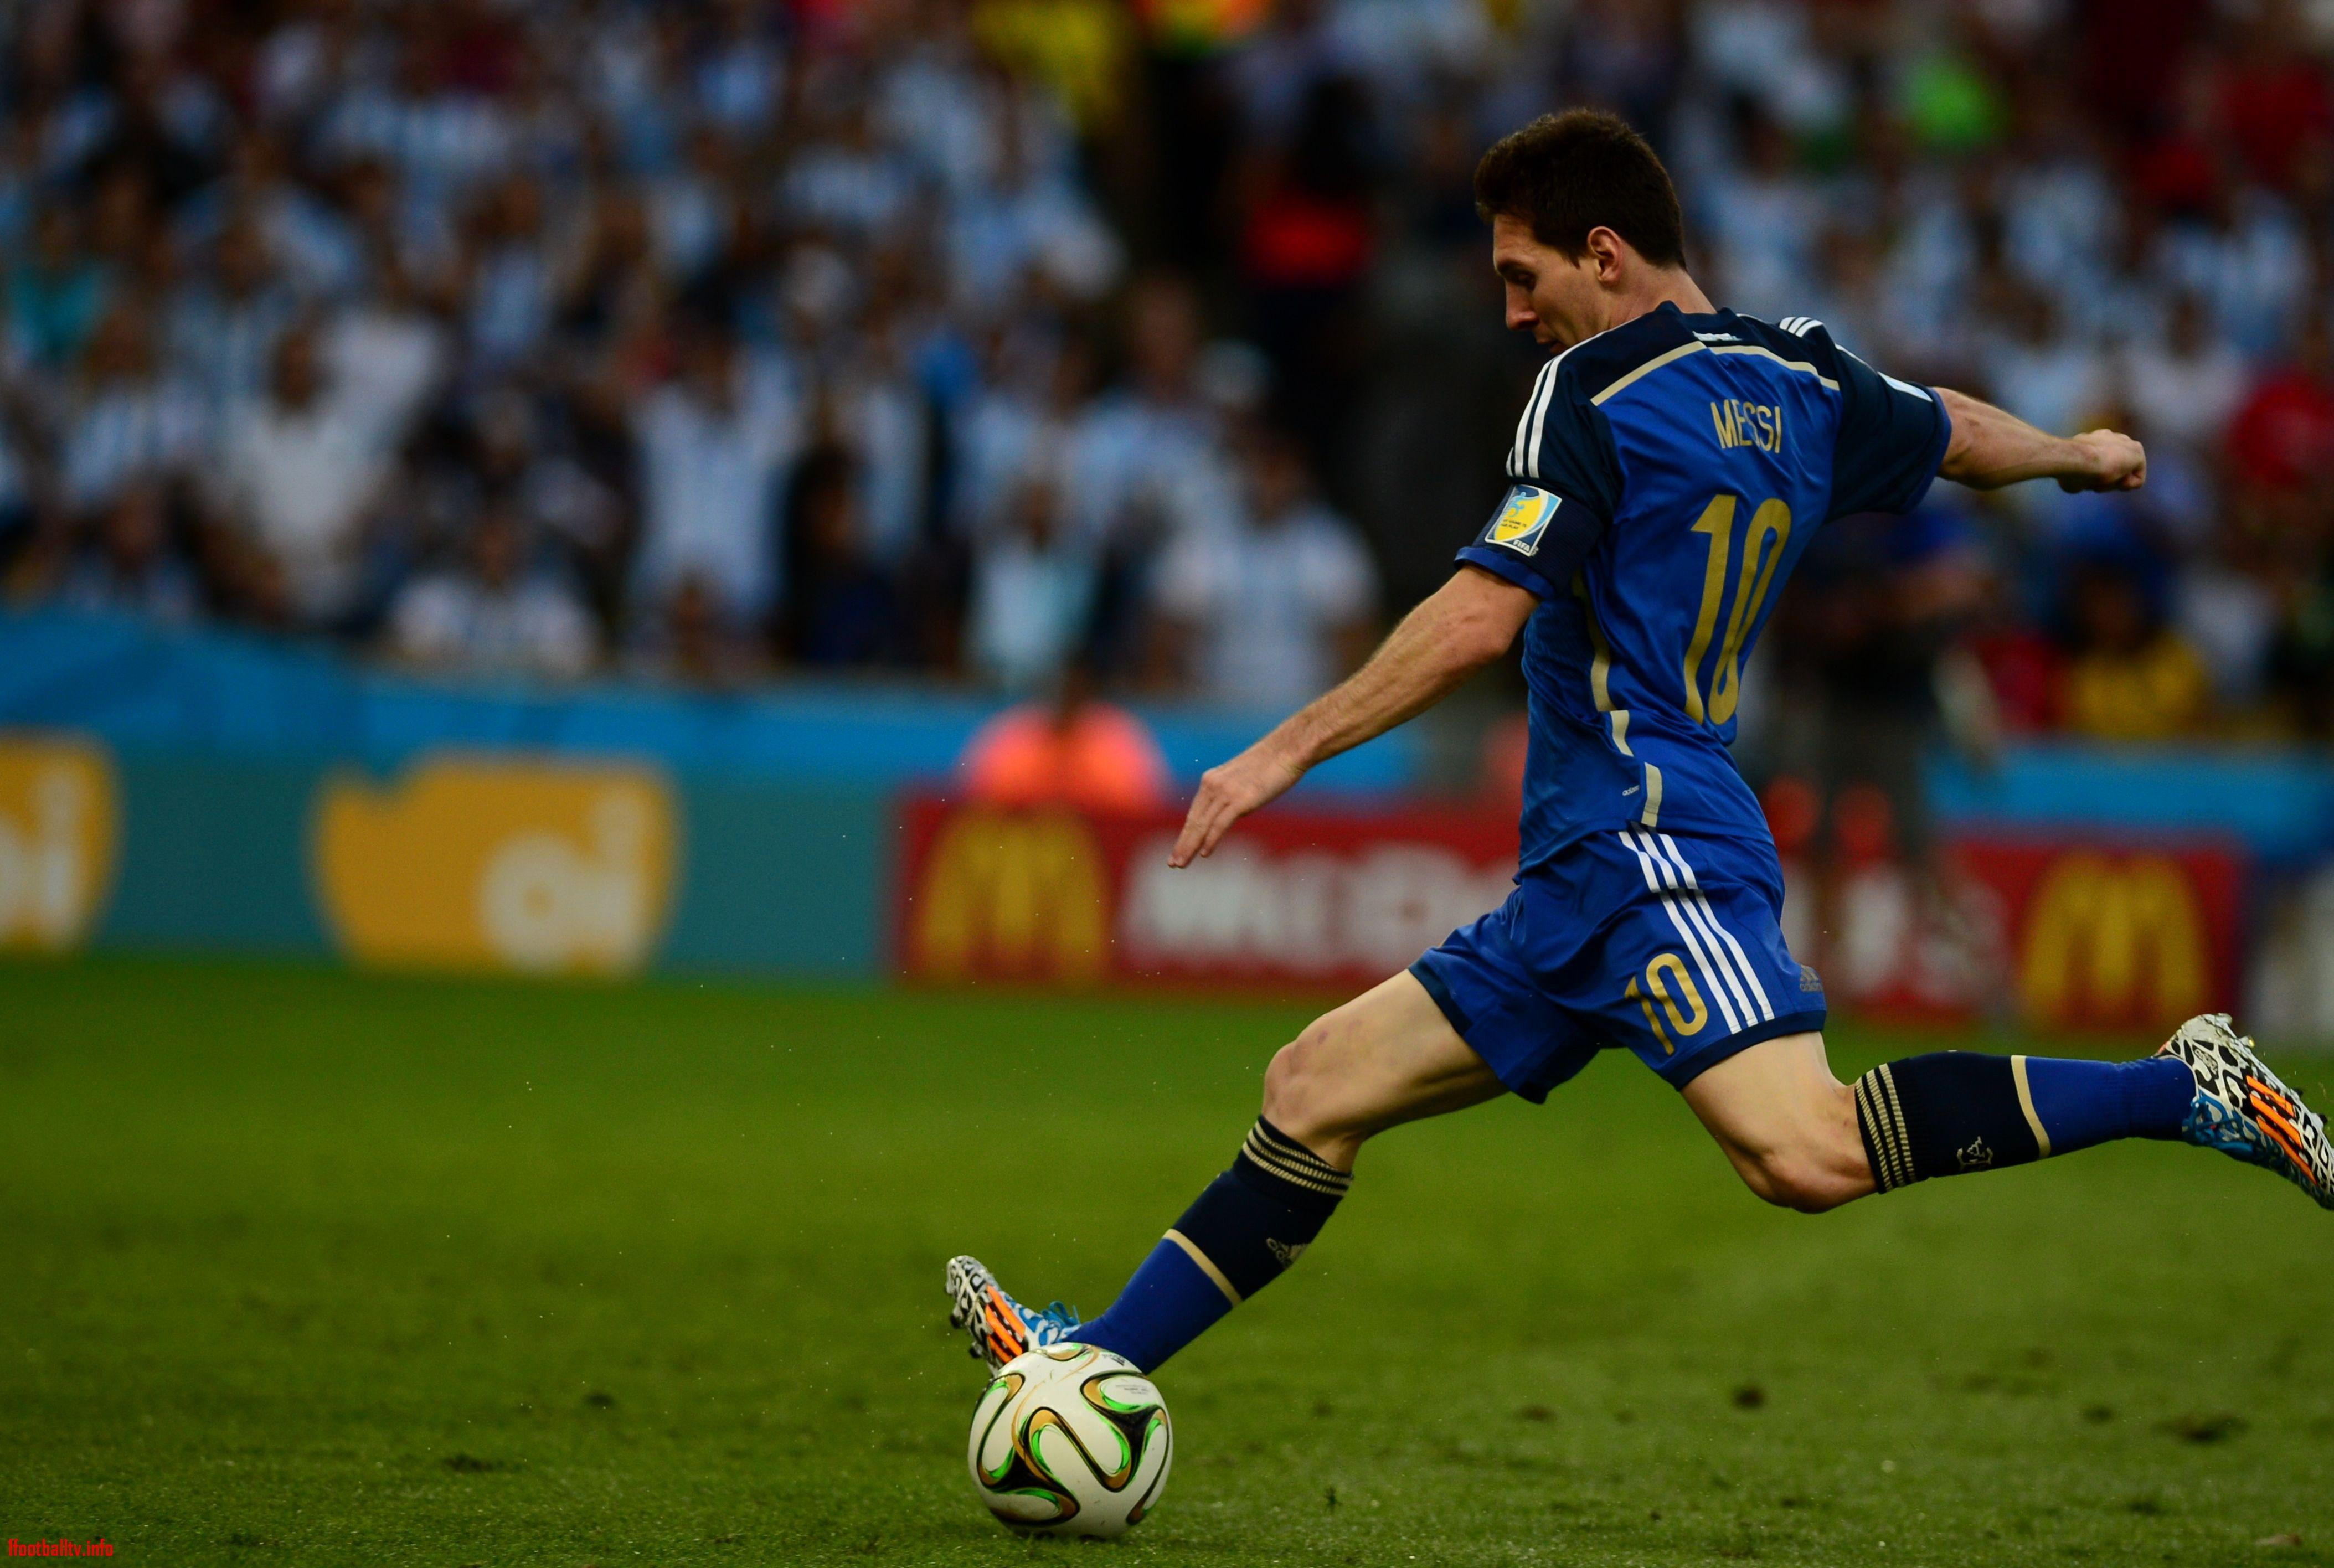 Inspirational Lionel Messi Shooting Wallpaper Football HD